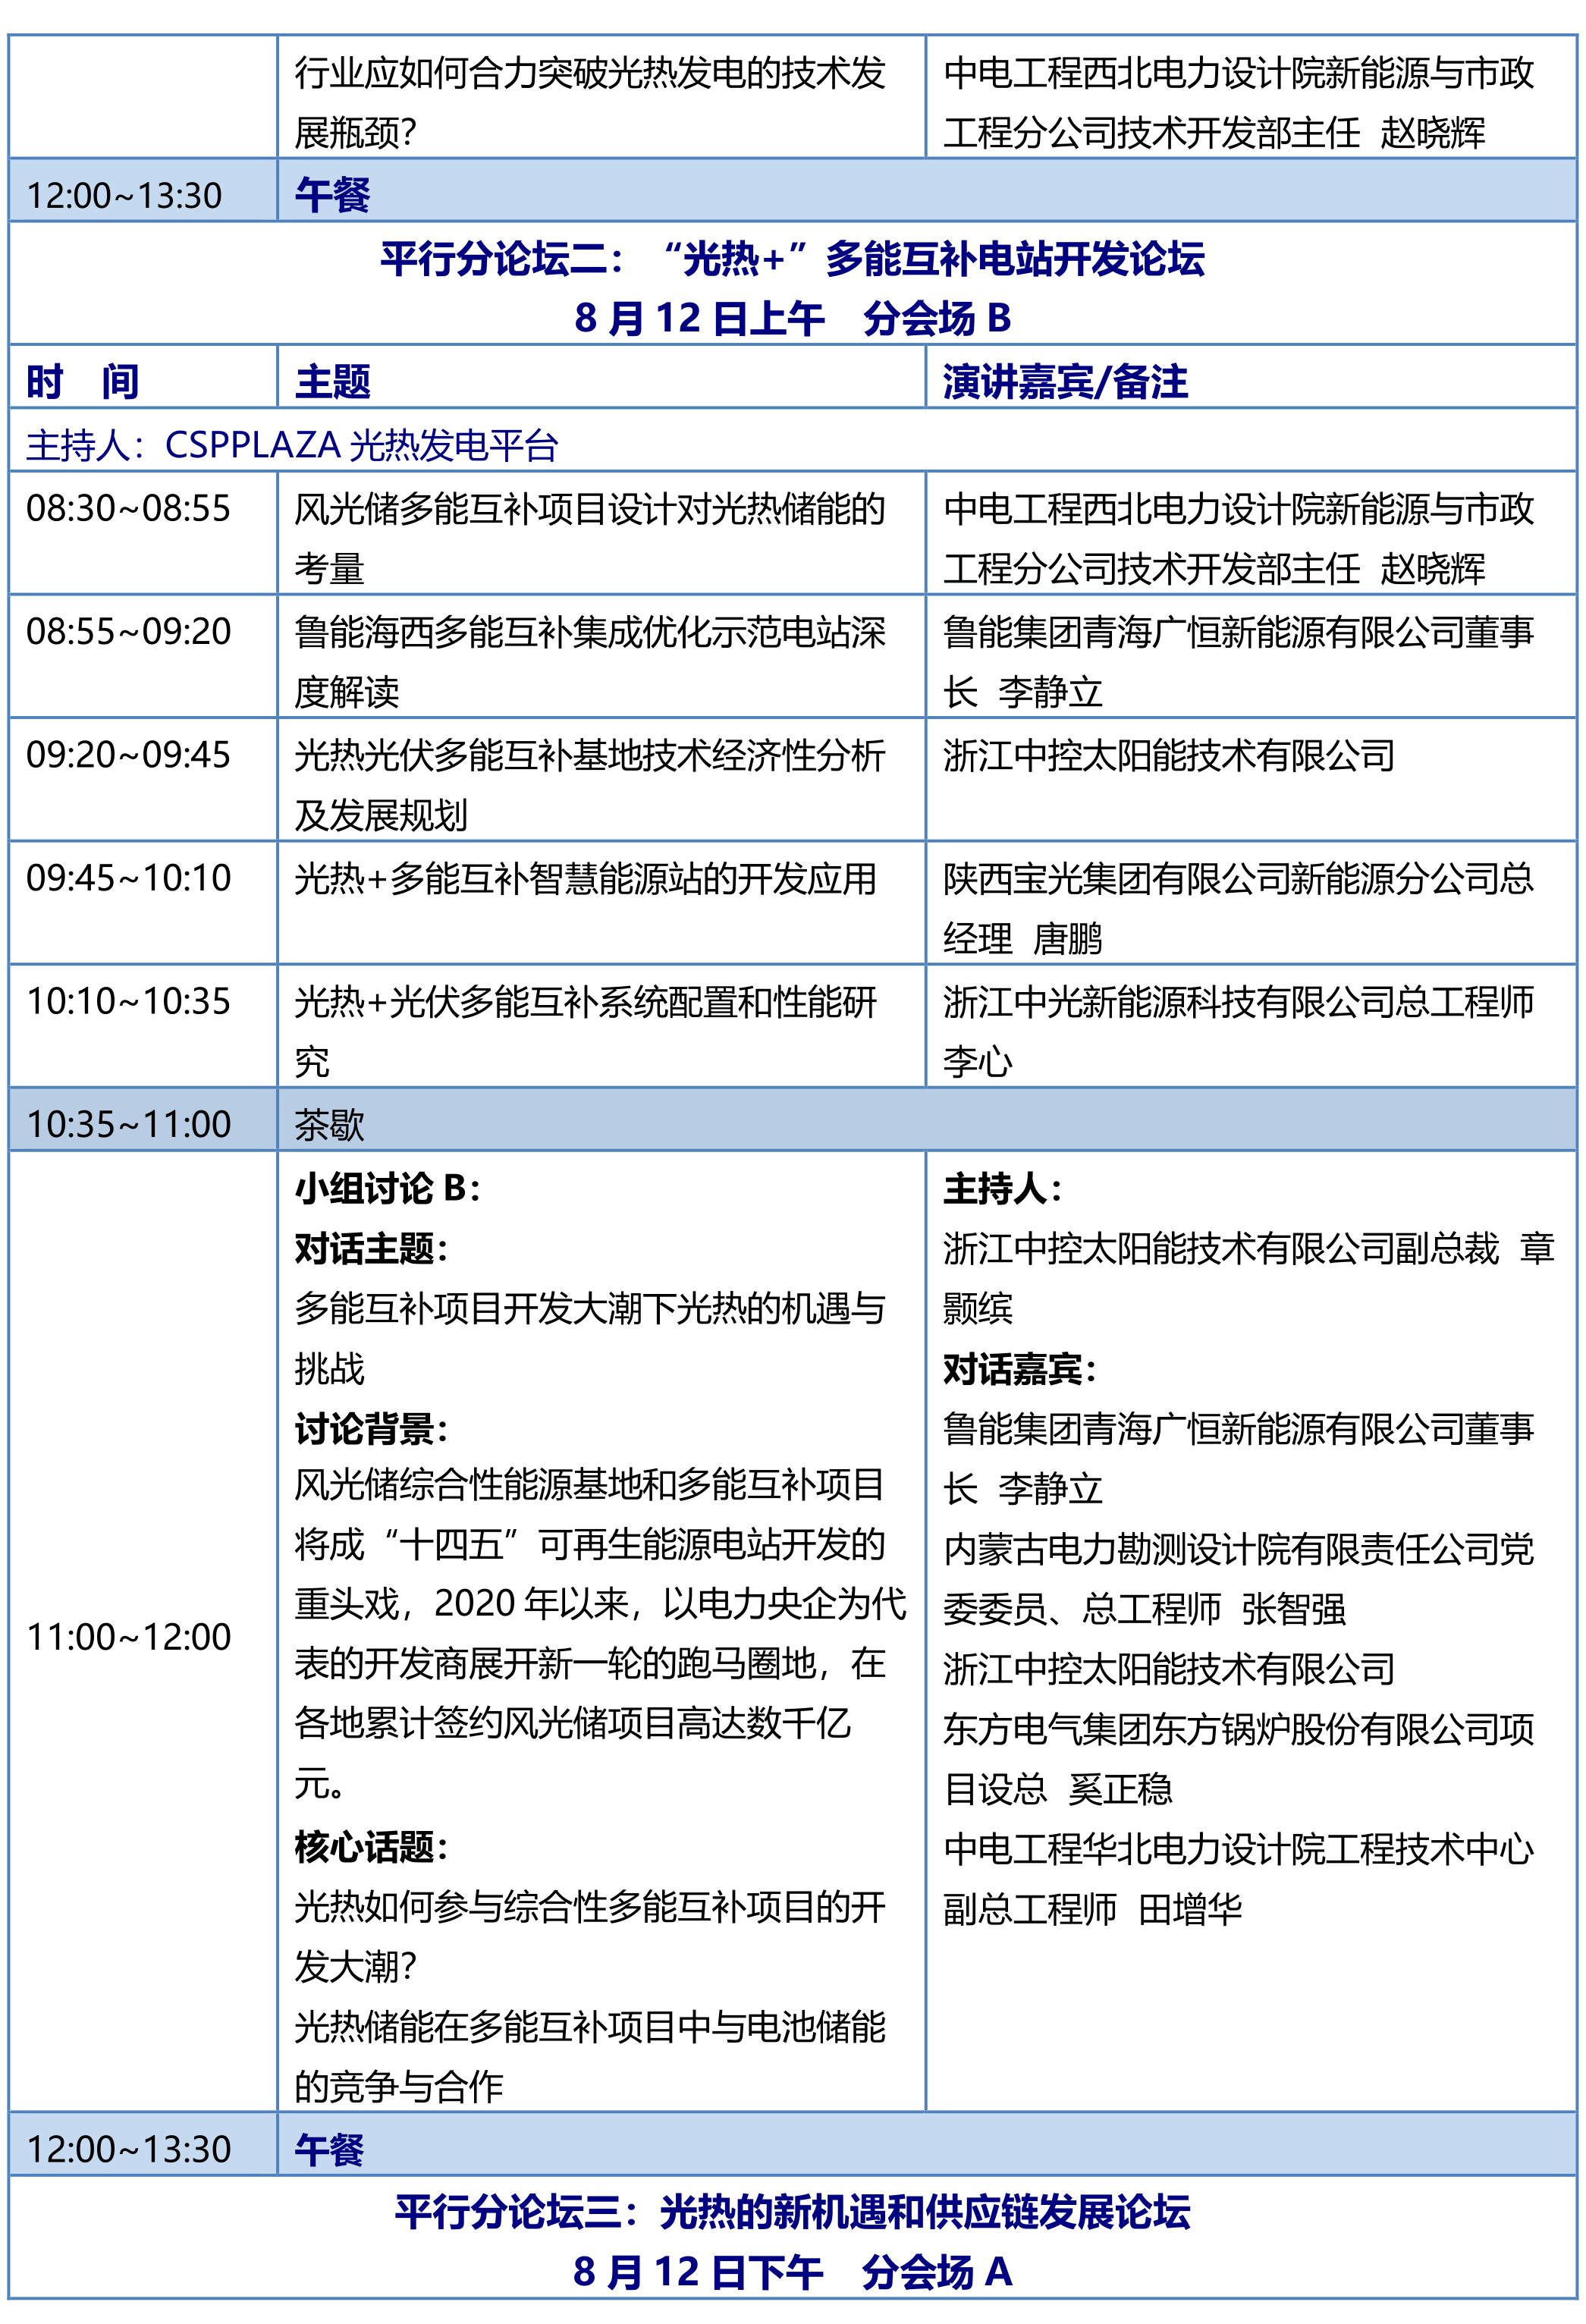 CPC2020中国国际光热大会议程-初版_4.png